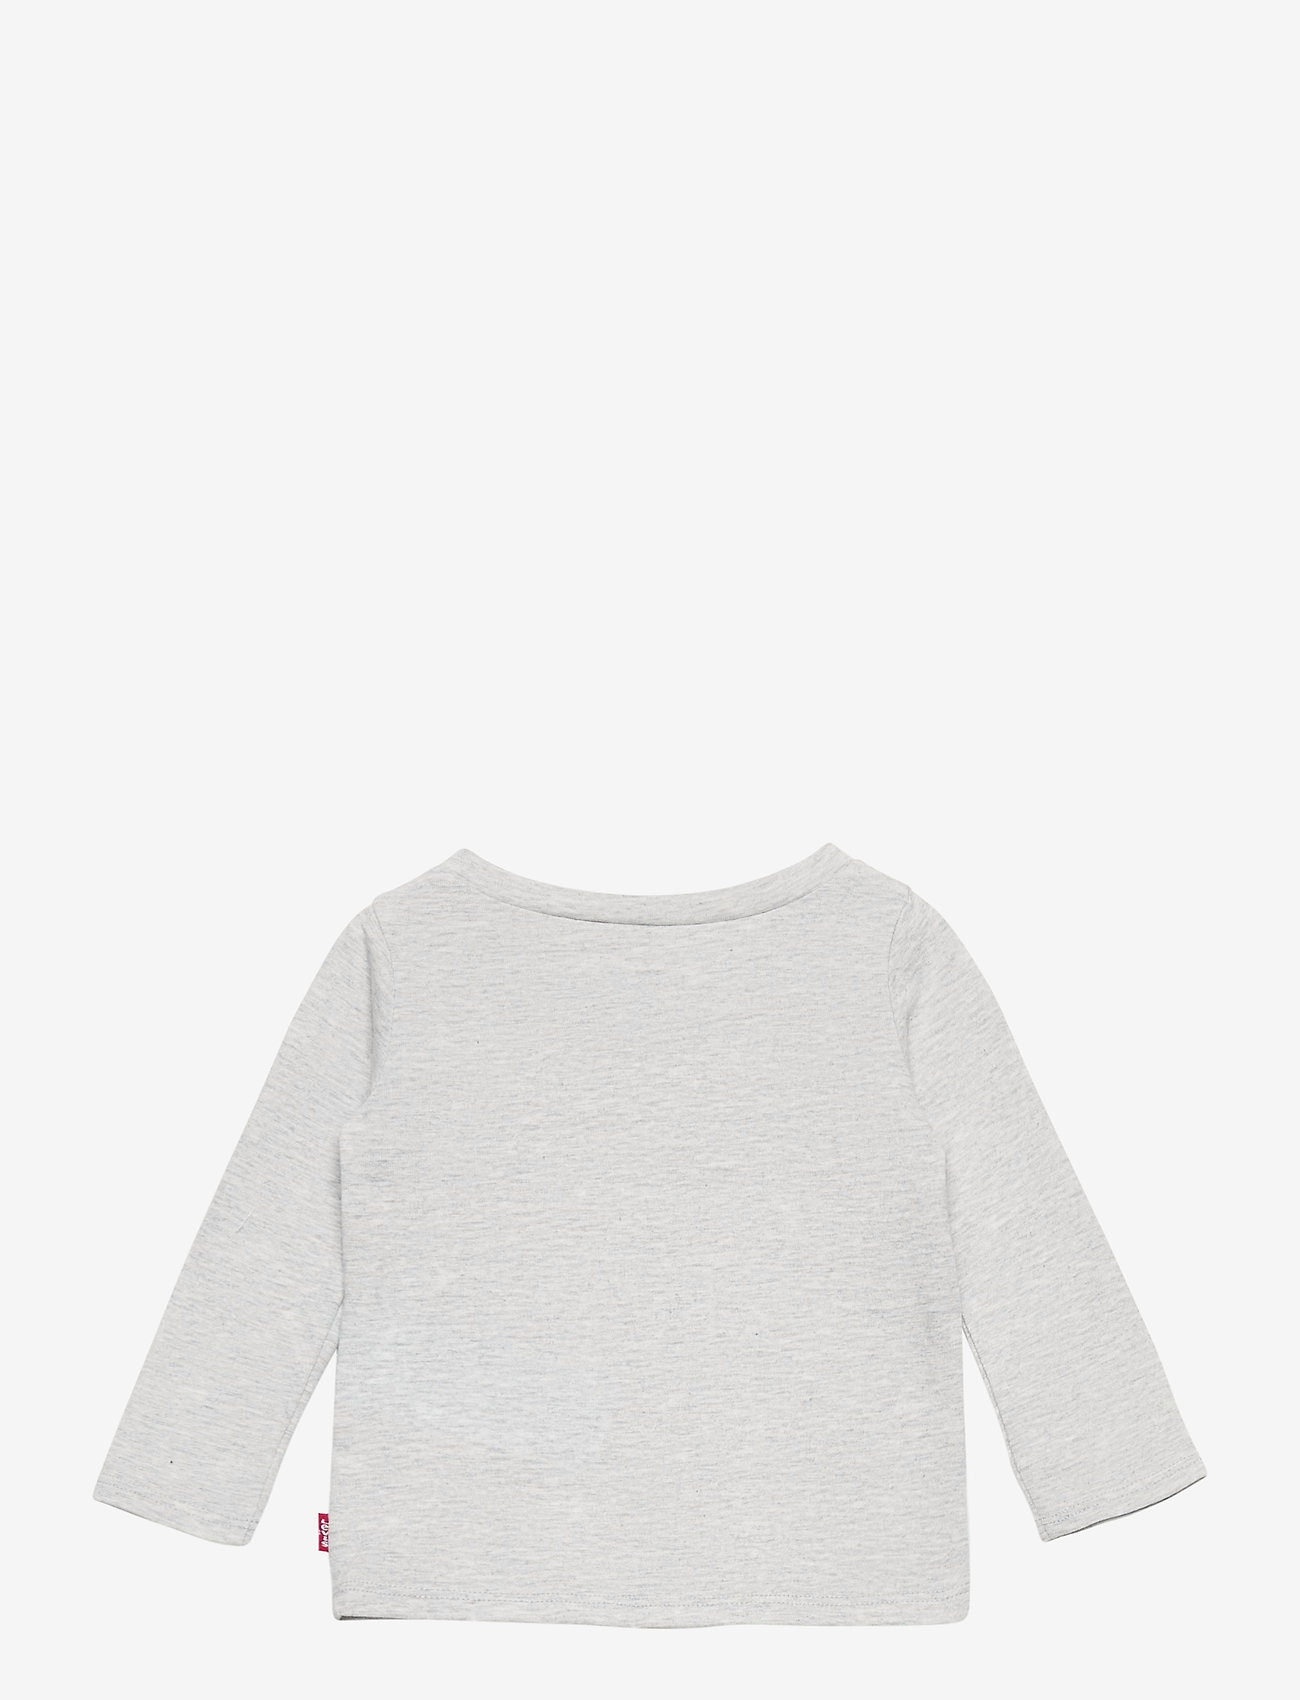 Levi's - LVG LS GRAPHIC TEE - langærmede t-shirts - light gray heather - 1